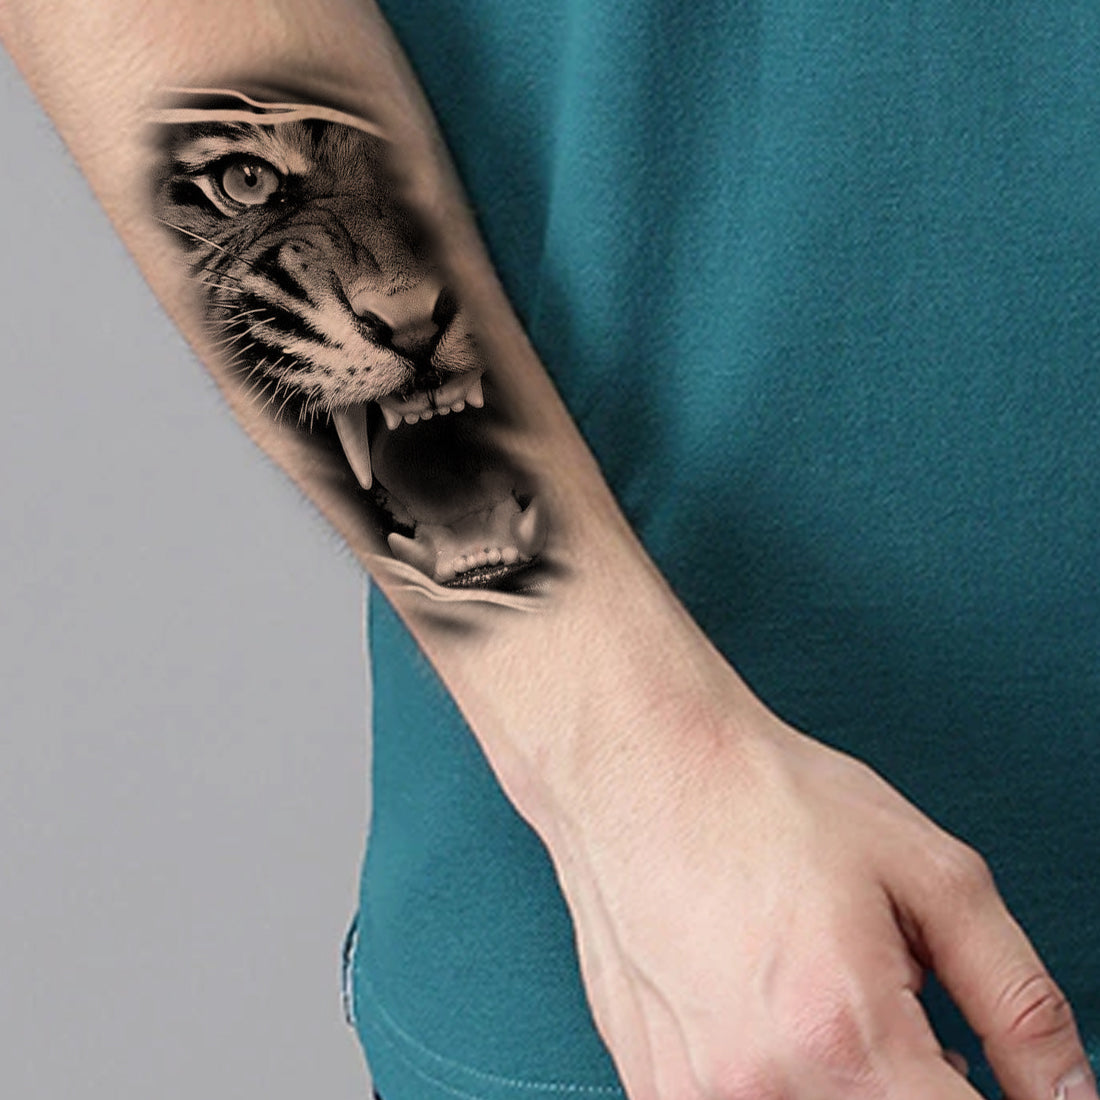 tiger tattoos for girls